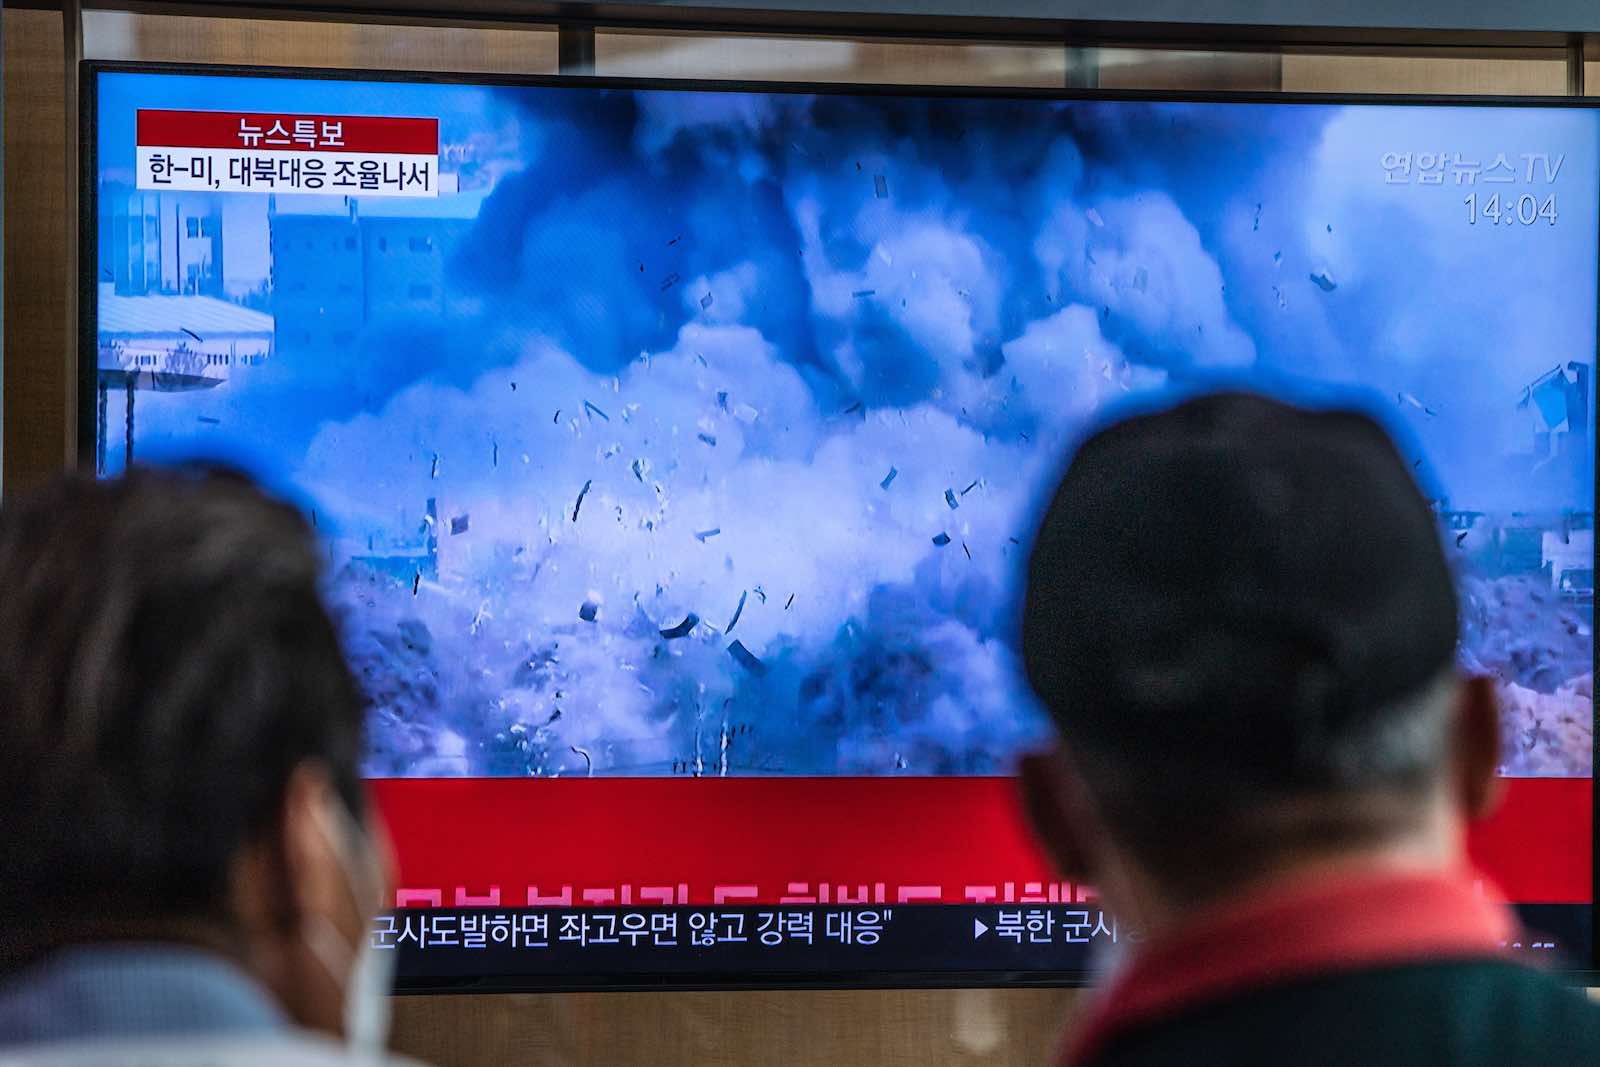 A broadcast of North Korea’s destruction of the liaison office built for talks with South Korea (Simon Shin via Getty Images)